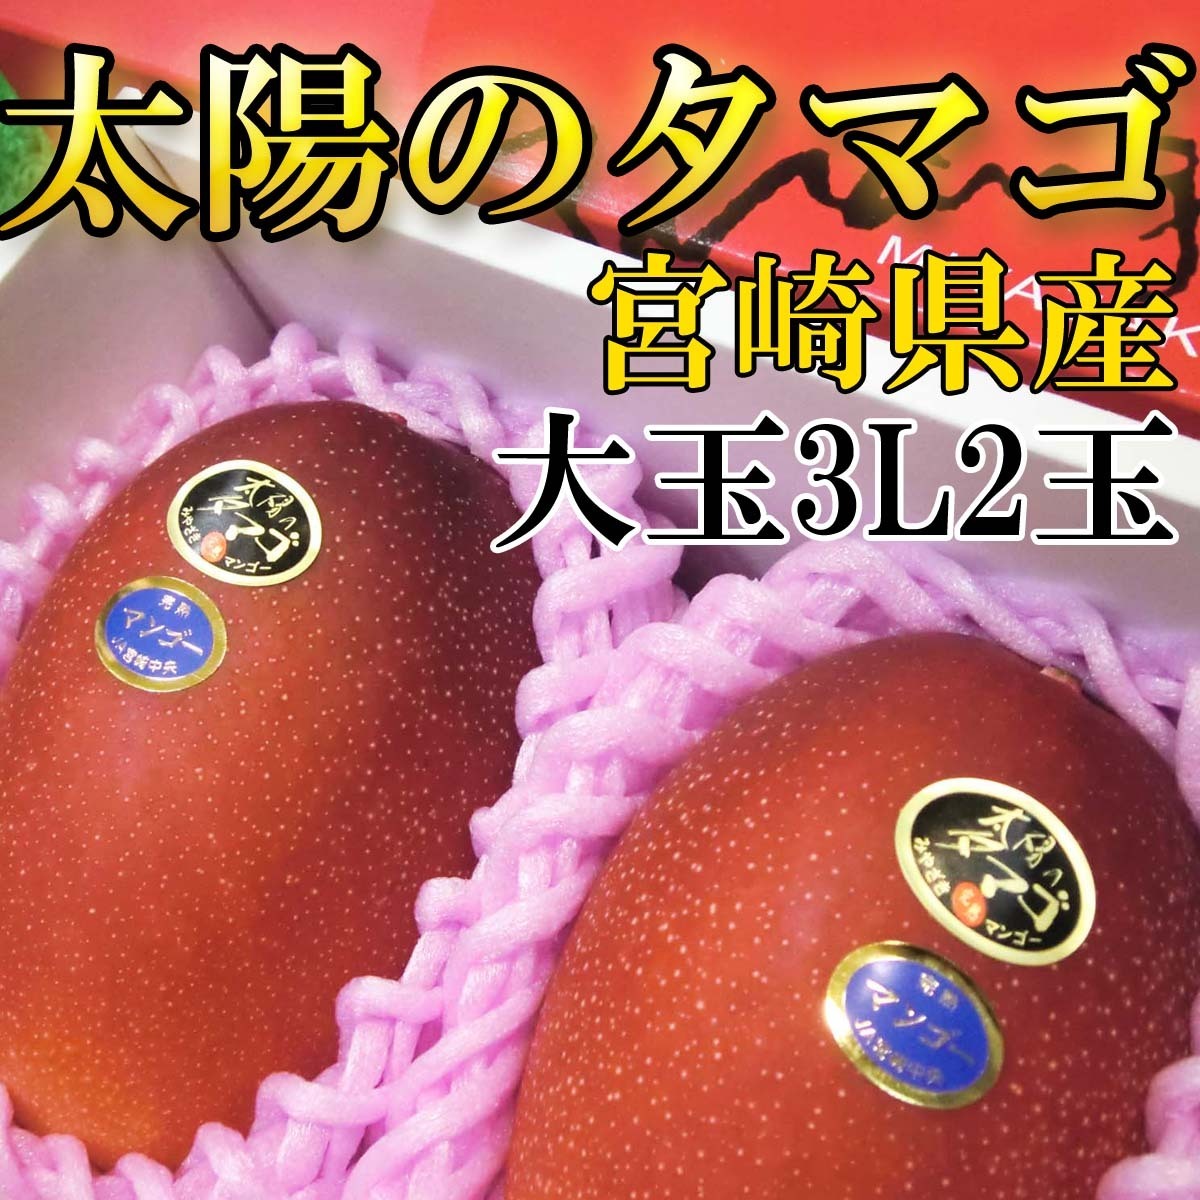 【Good】宮崎産マンゴー『太陽のタマゴ』 大玉3L2玉入り ご予約の画像1